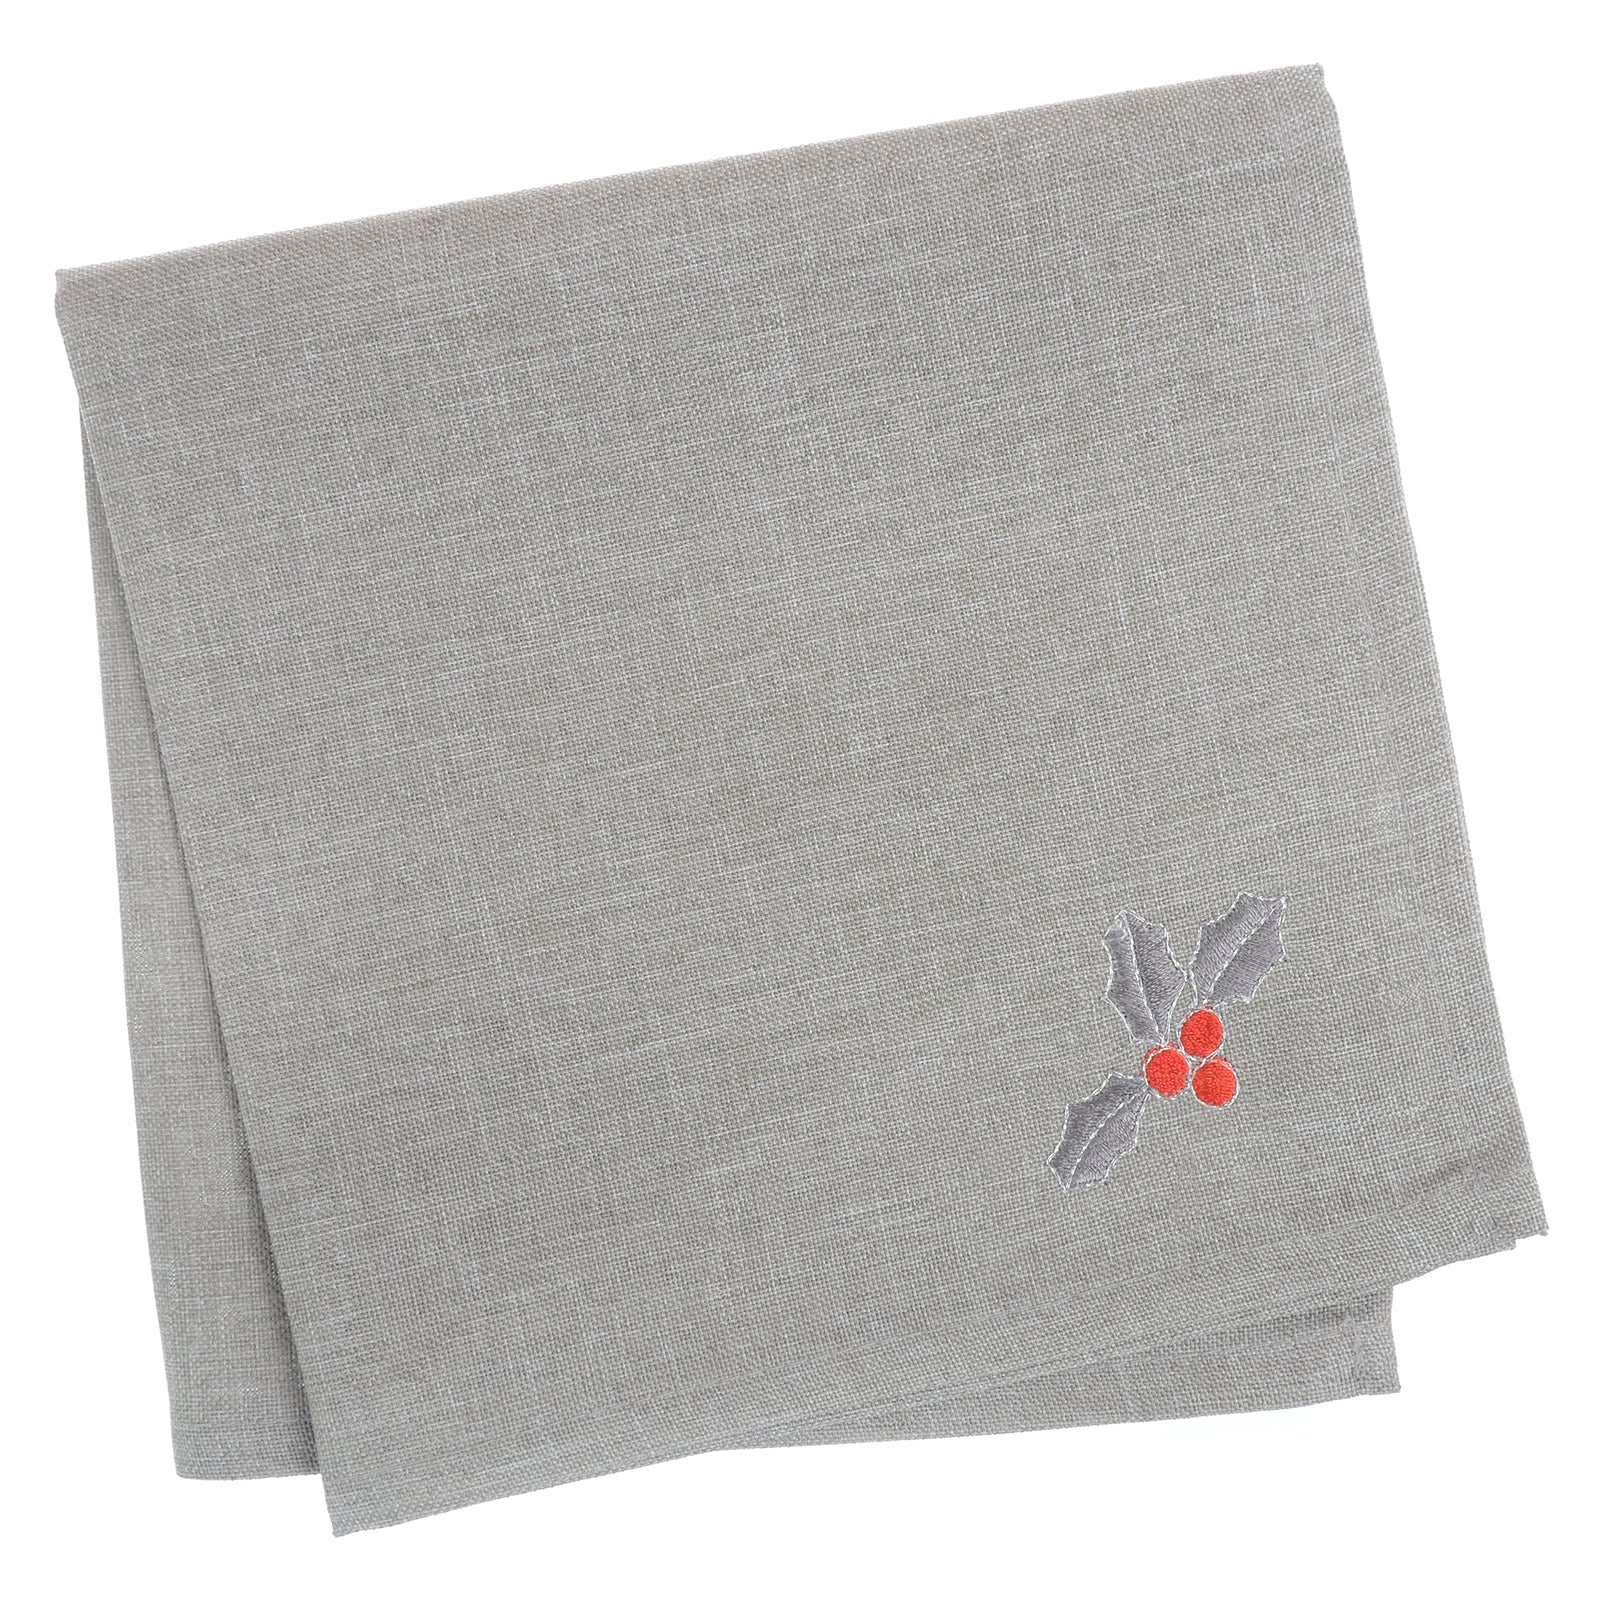 Mr Crimbo Grey Merry Christmas Embroidered Tablecloth/Napkin - MrCrimbo.co.uk -XS5852 - 4pk Napkins -christmas napkins